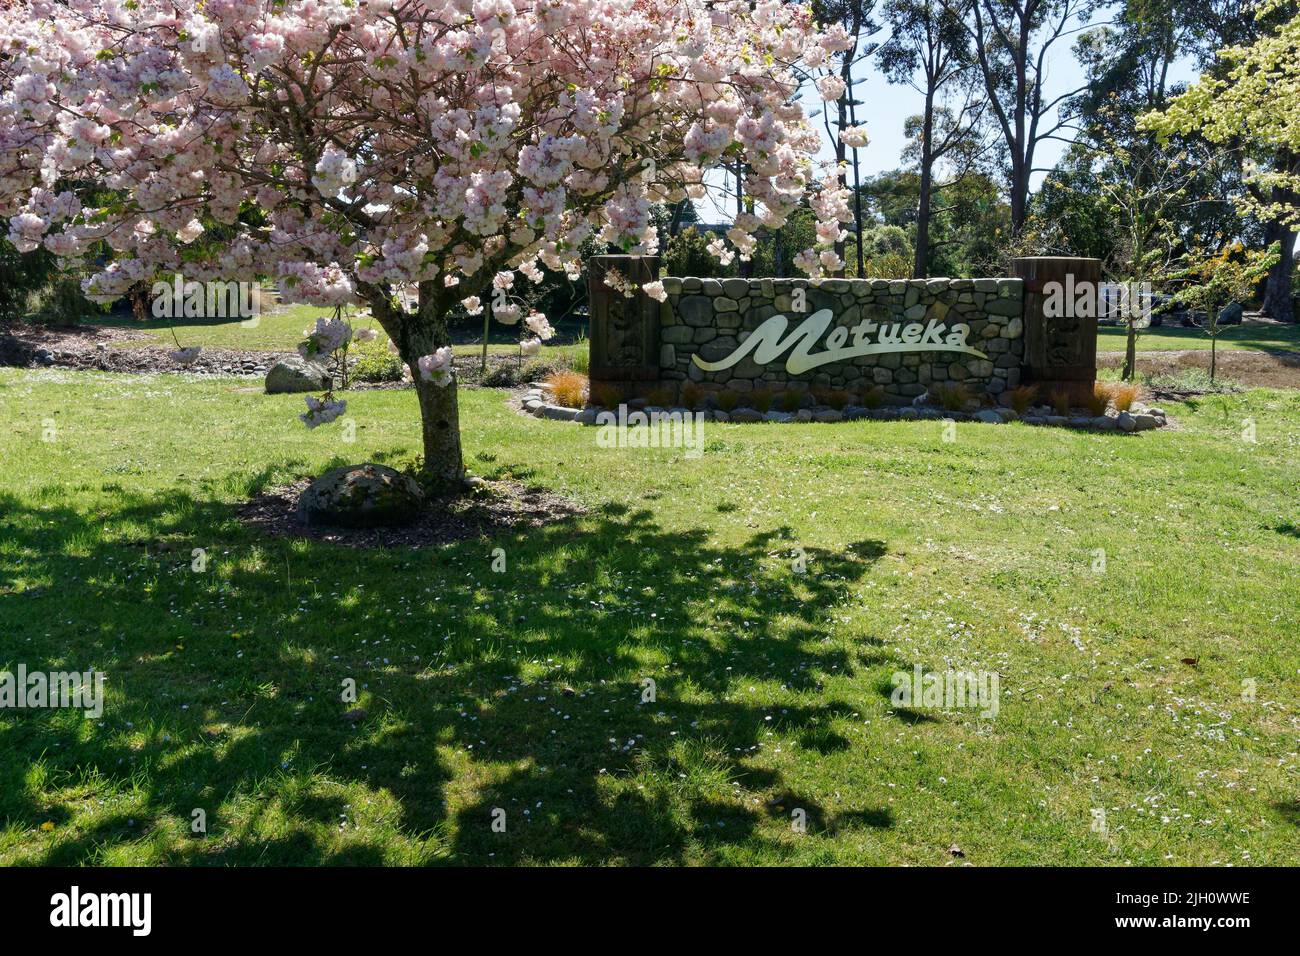 Motueka sign under spring blossom, Motueka, Tasman region, south island, Aotearoa / New Zealand Stock Photo